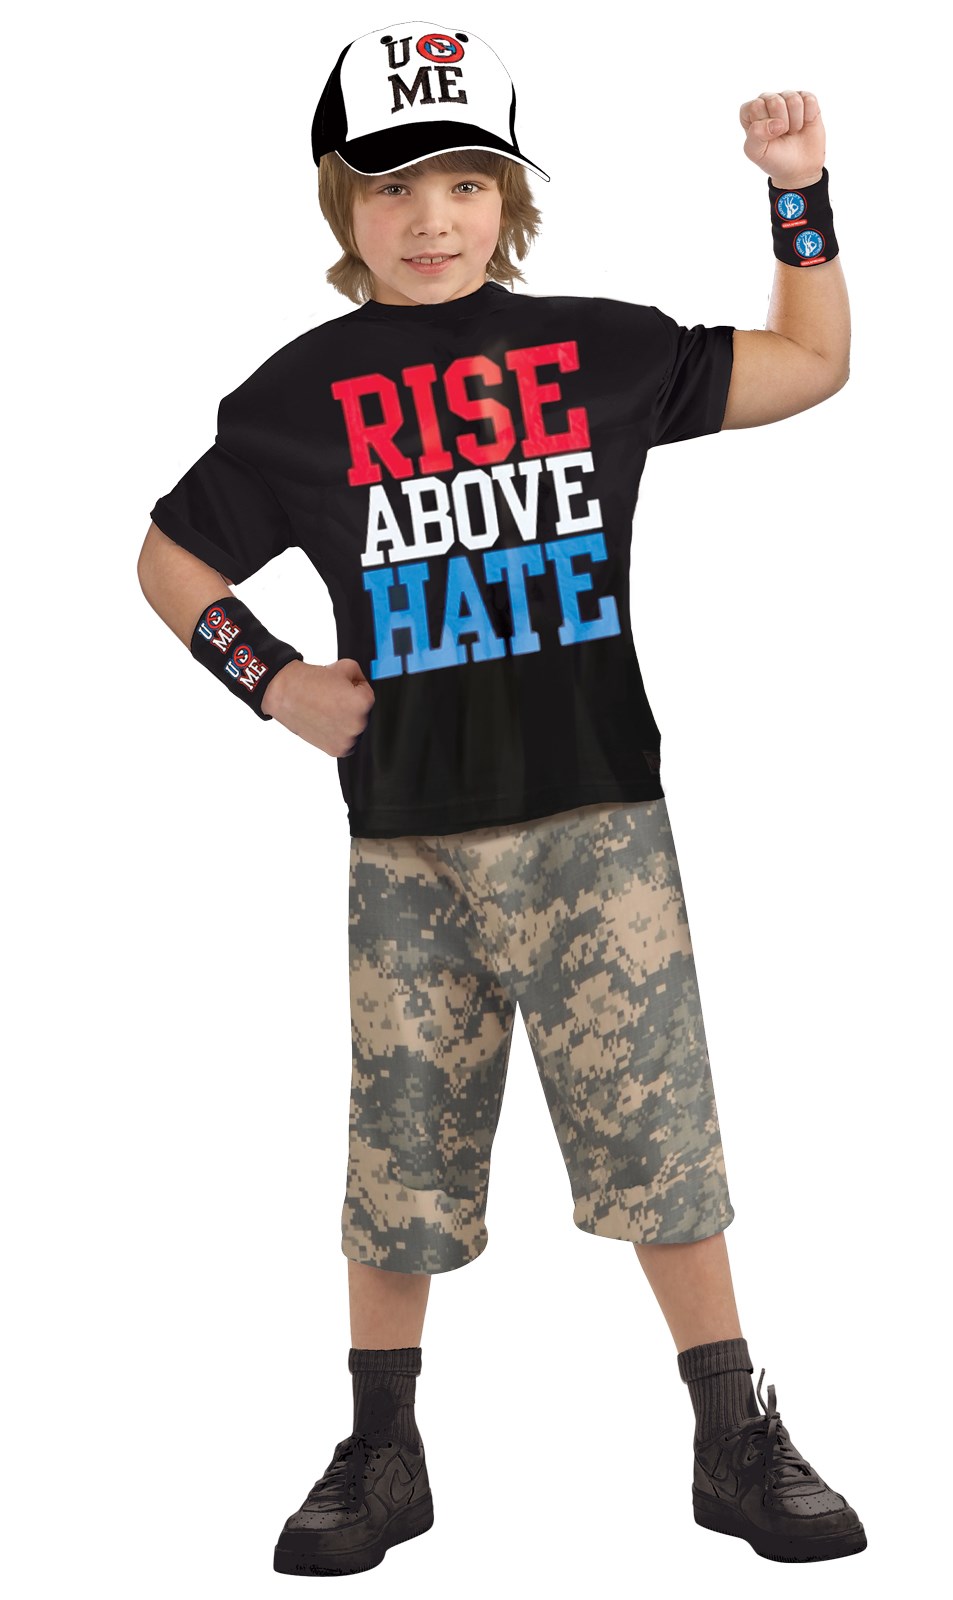 WWE John Cena Muscle Chest Child Costume